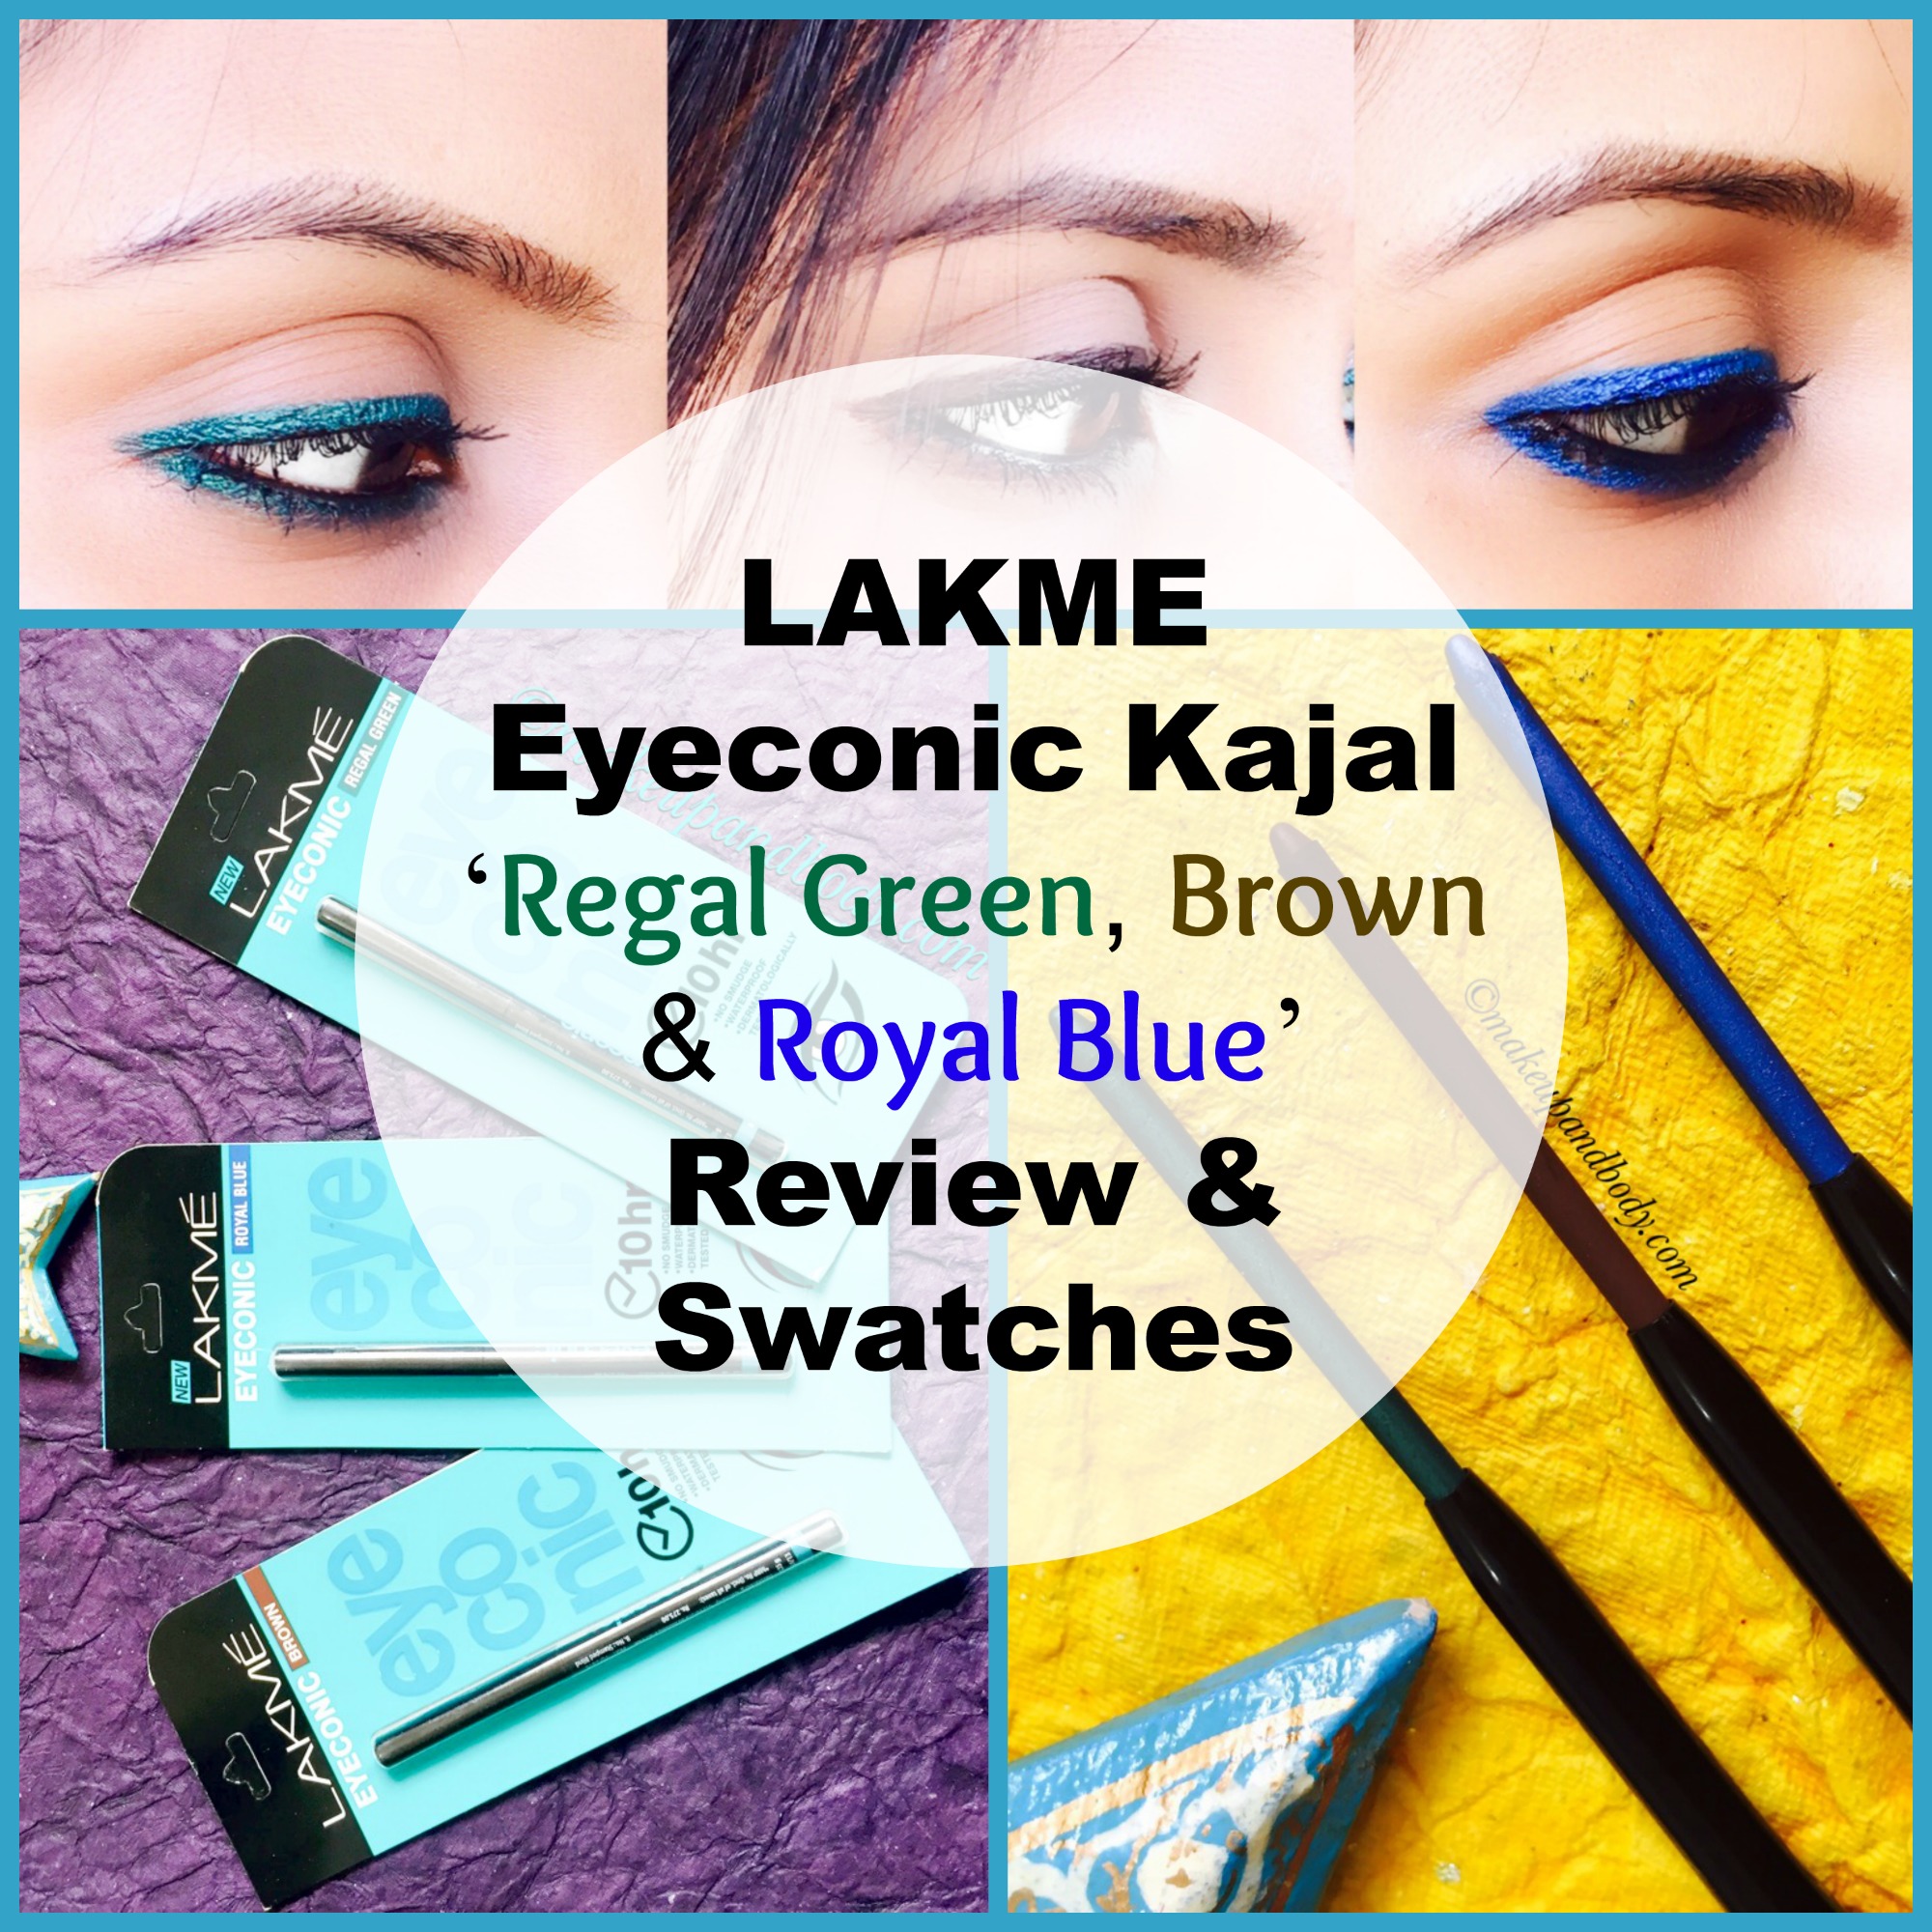 Lakme Eyeconic Kajal Review